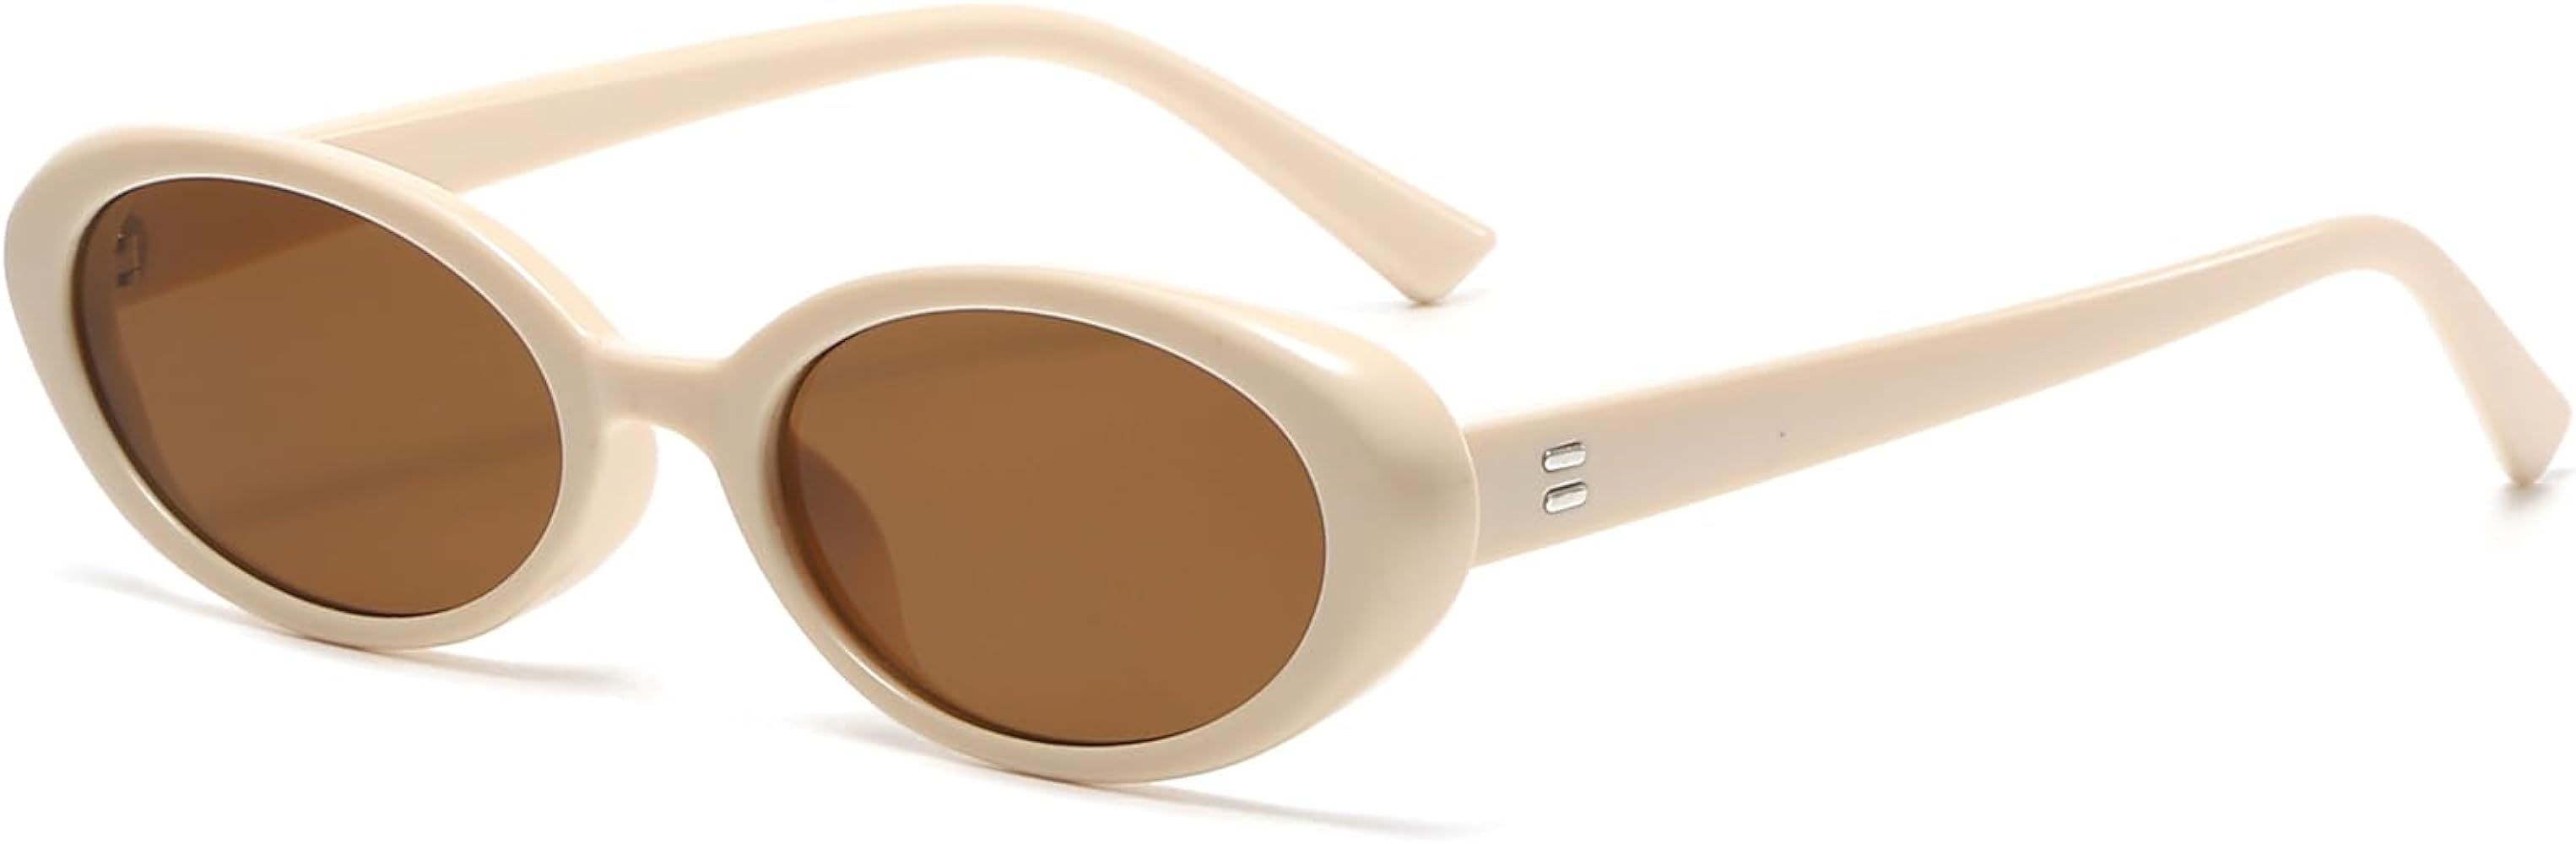 Retro Oval Sunglasses for Women Men Fashion Small Oval Sunglasses 90s Vintage Shades | Amazon (US)